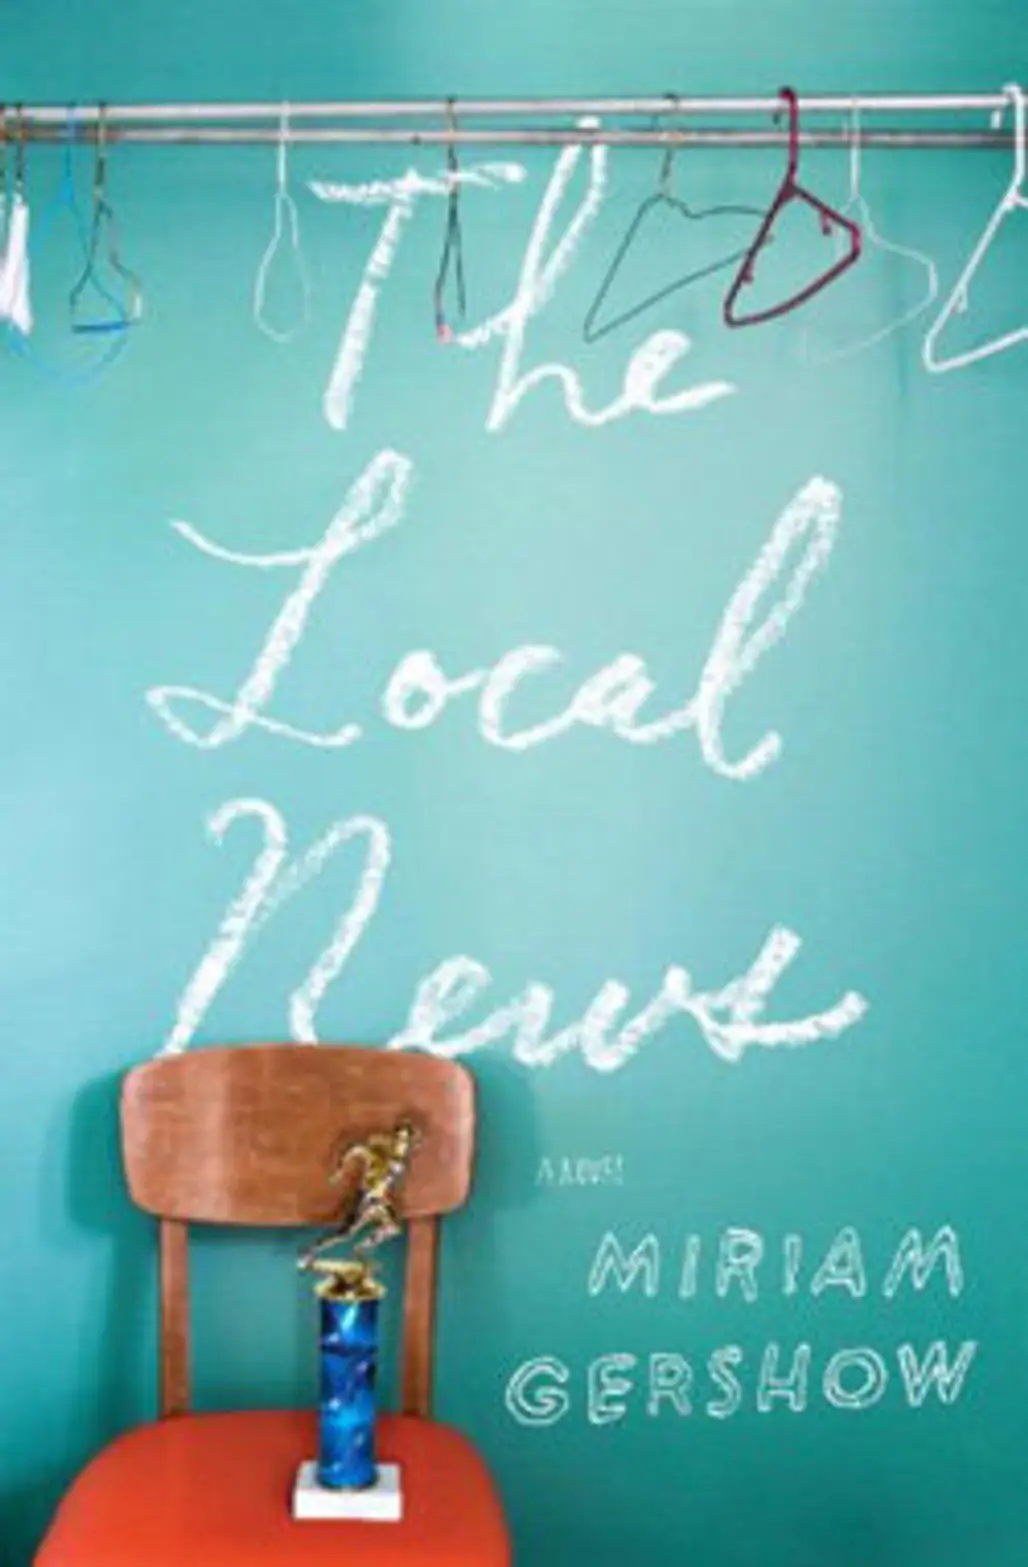 The Local News – Miriam Gershow